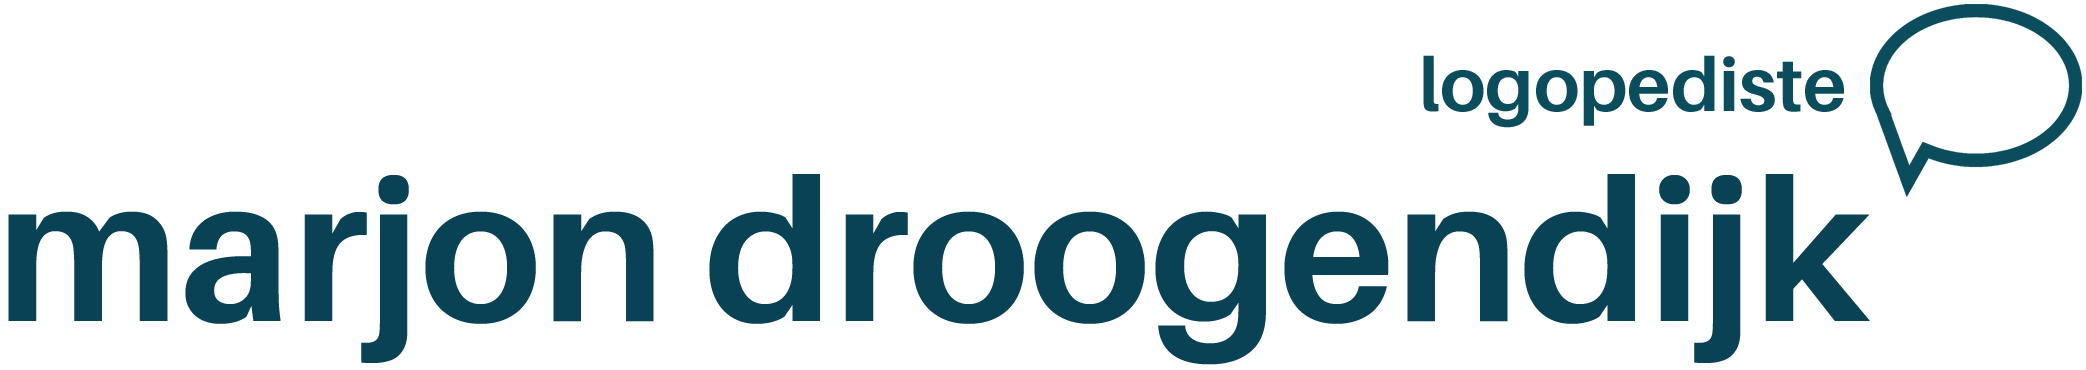 Marjon Droogendijk logopediste logo